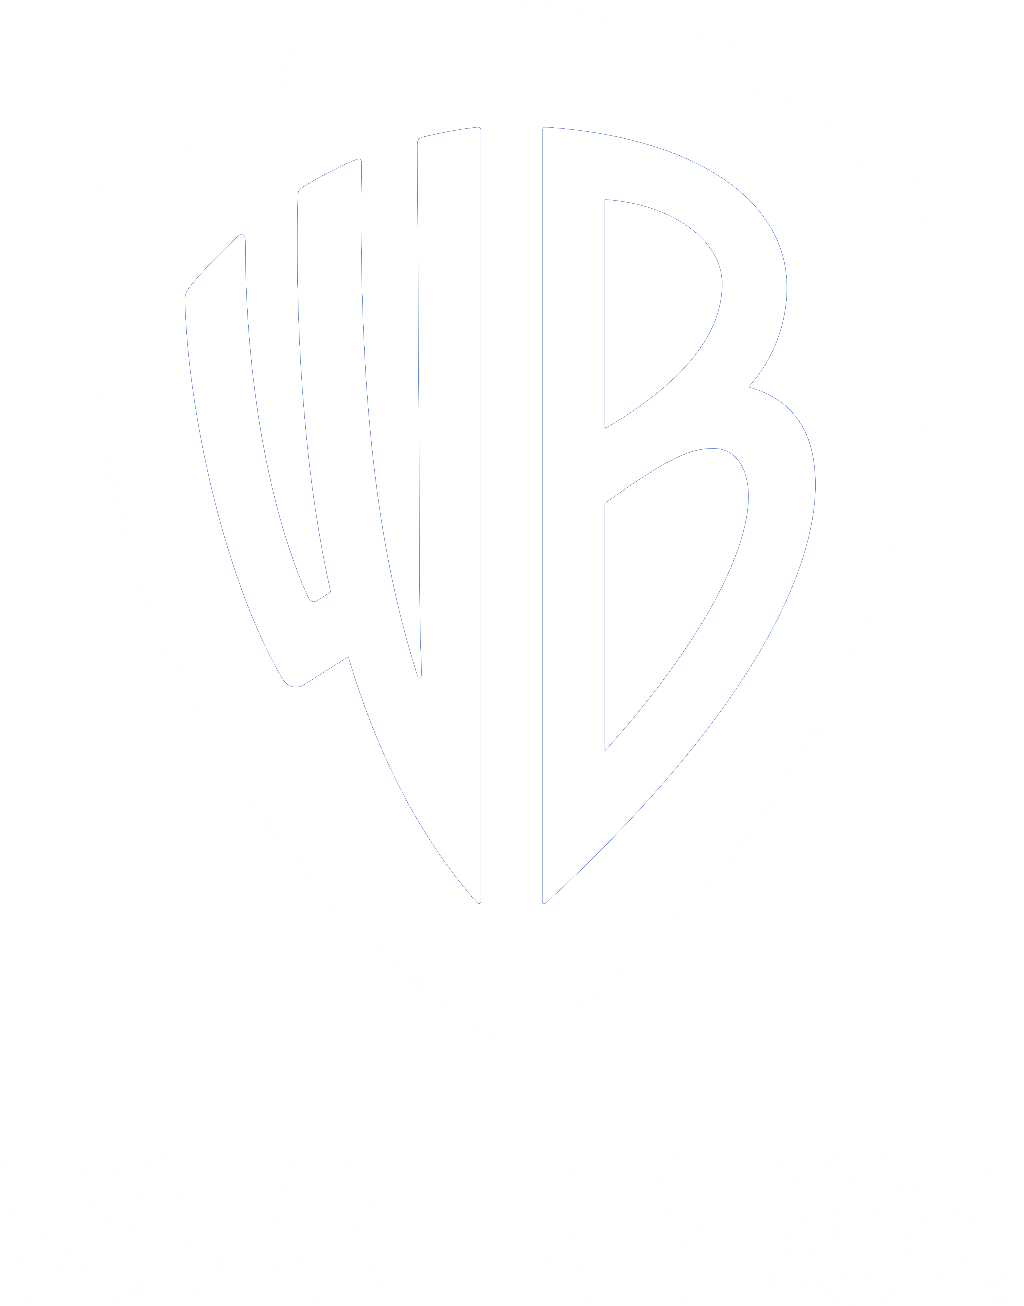 Warner Bros logo, a partner of Charisma.